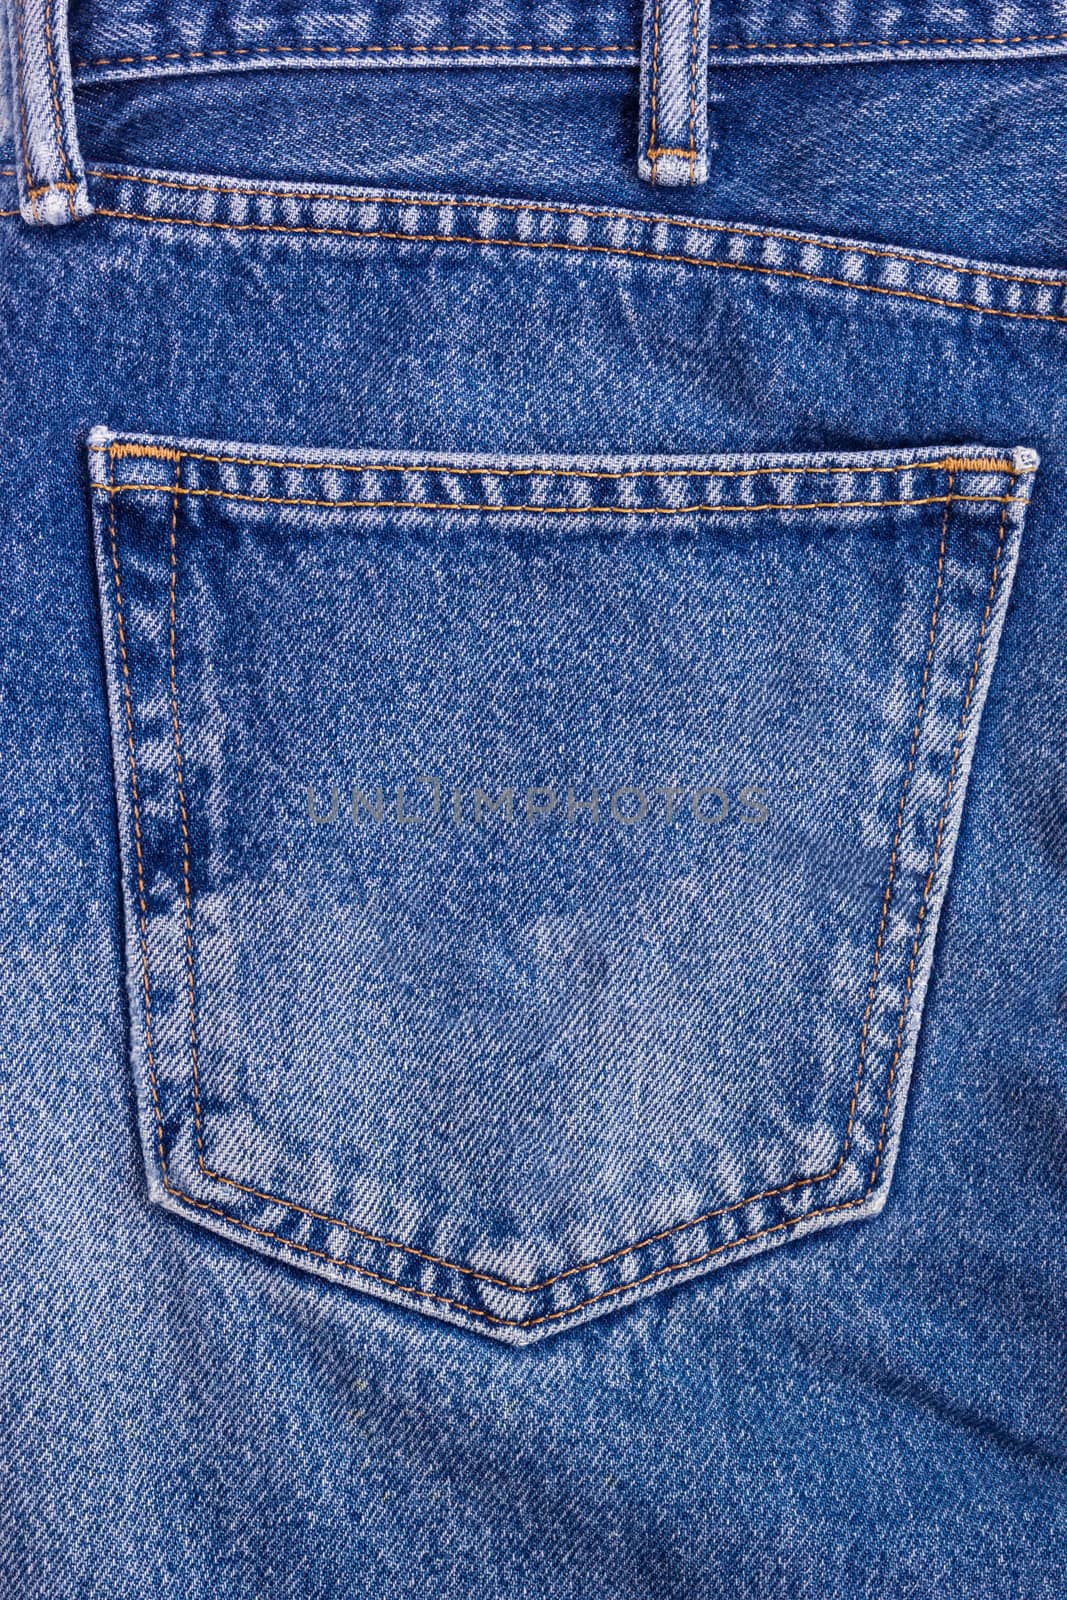 denim blue jean pocket texture is the classic indigo fashion. by rakoptonLPN